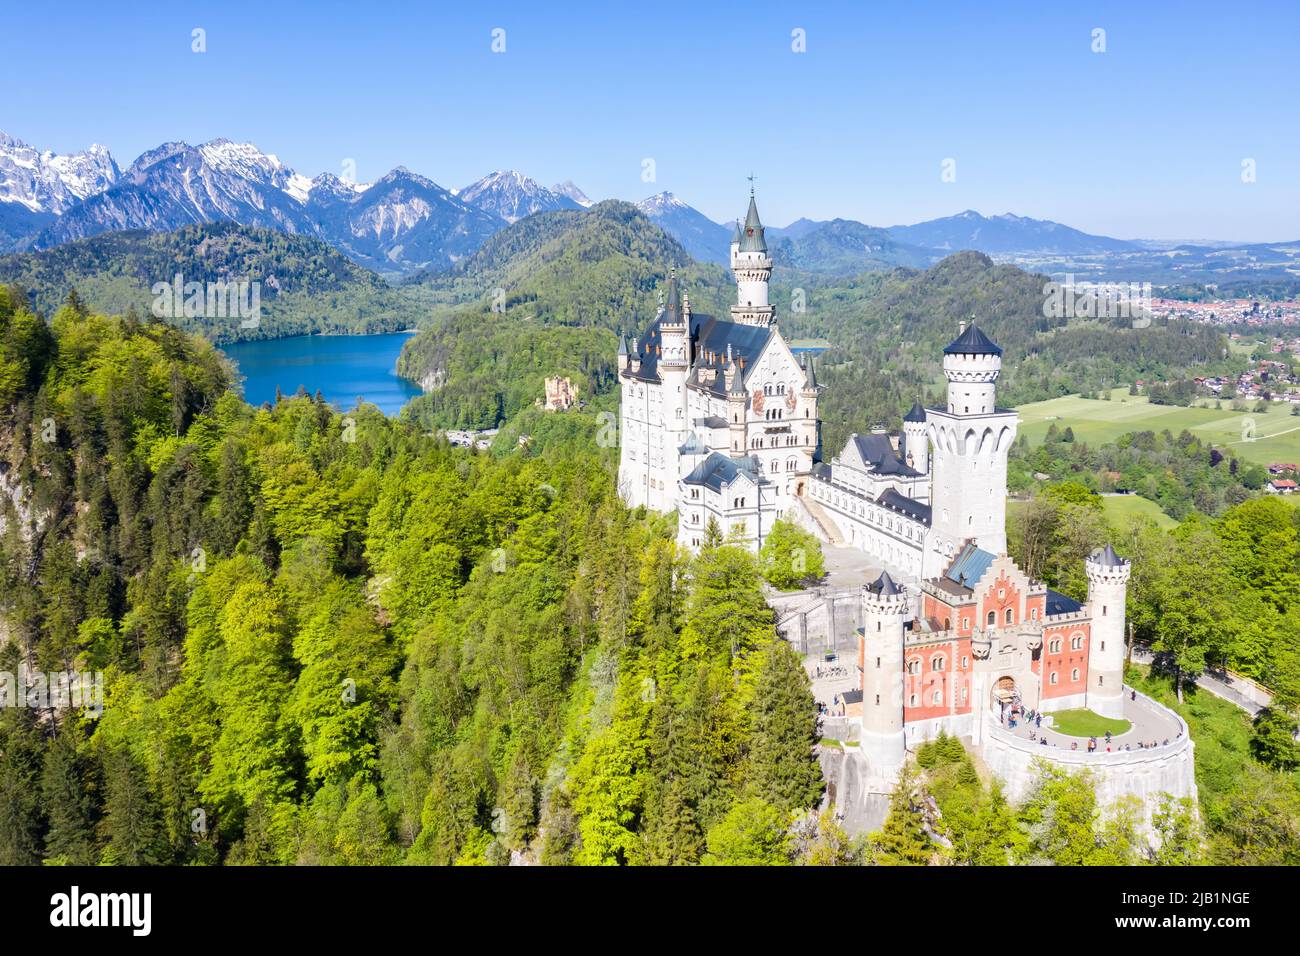 Schloss Neuschwanstein castle aerial view Alps landscape travel palace in Bavaria Germany Stock Photo